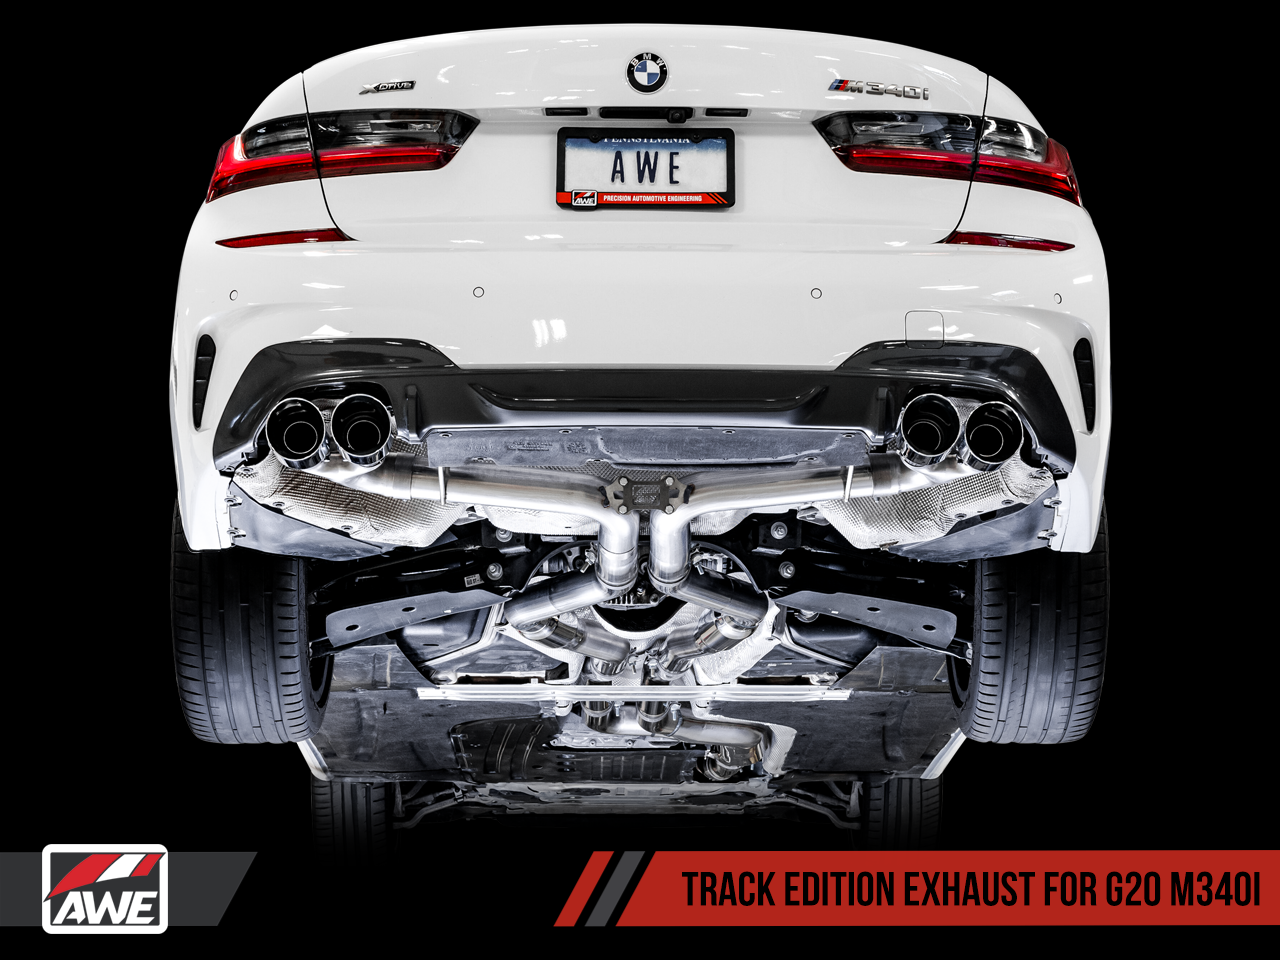 AWE Track Edition Exhaust for G20 M340i - Diamond Black Tips